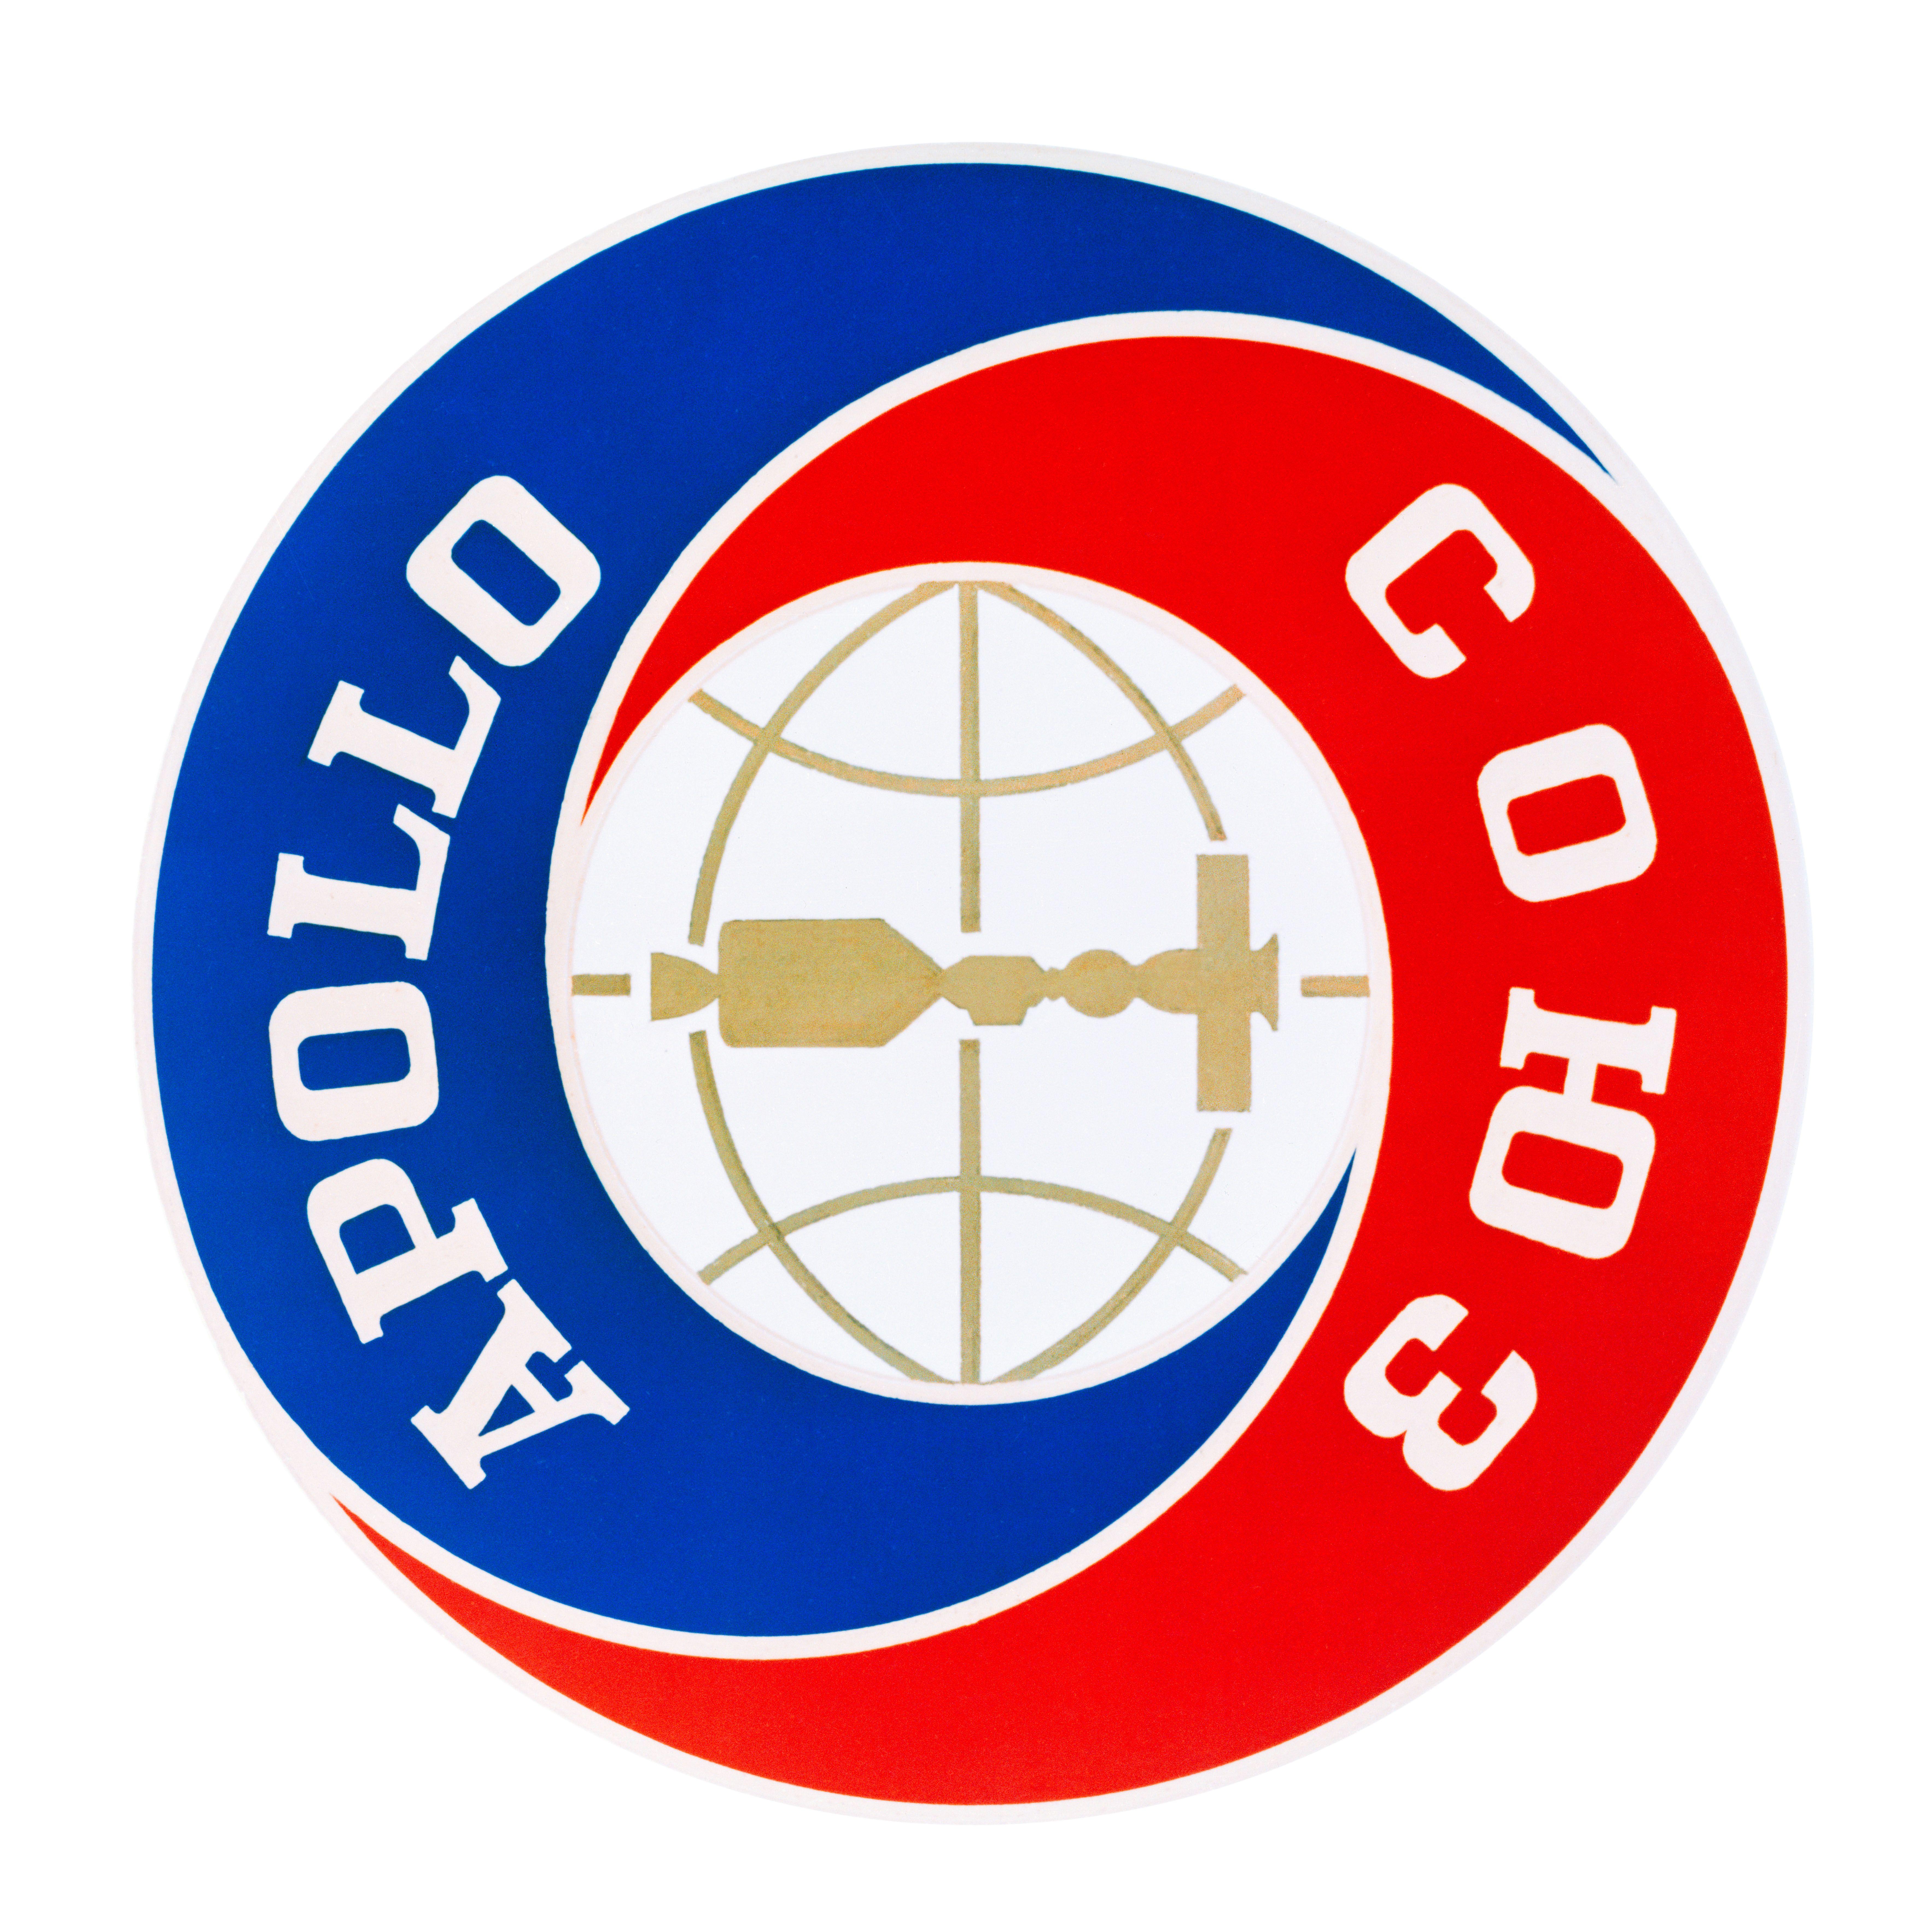 NASA Ship Logo - Mission Patches